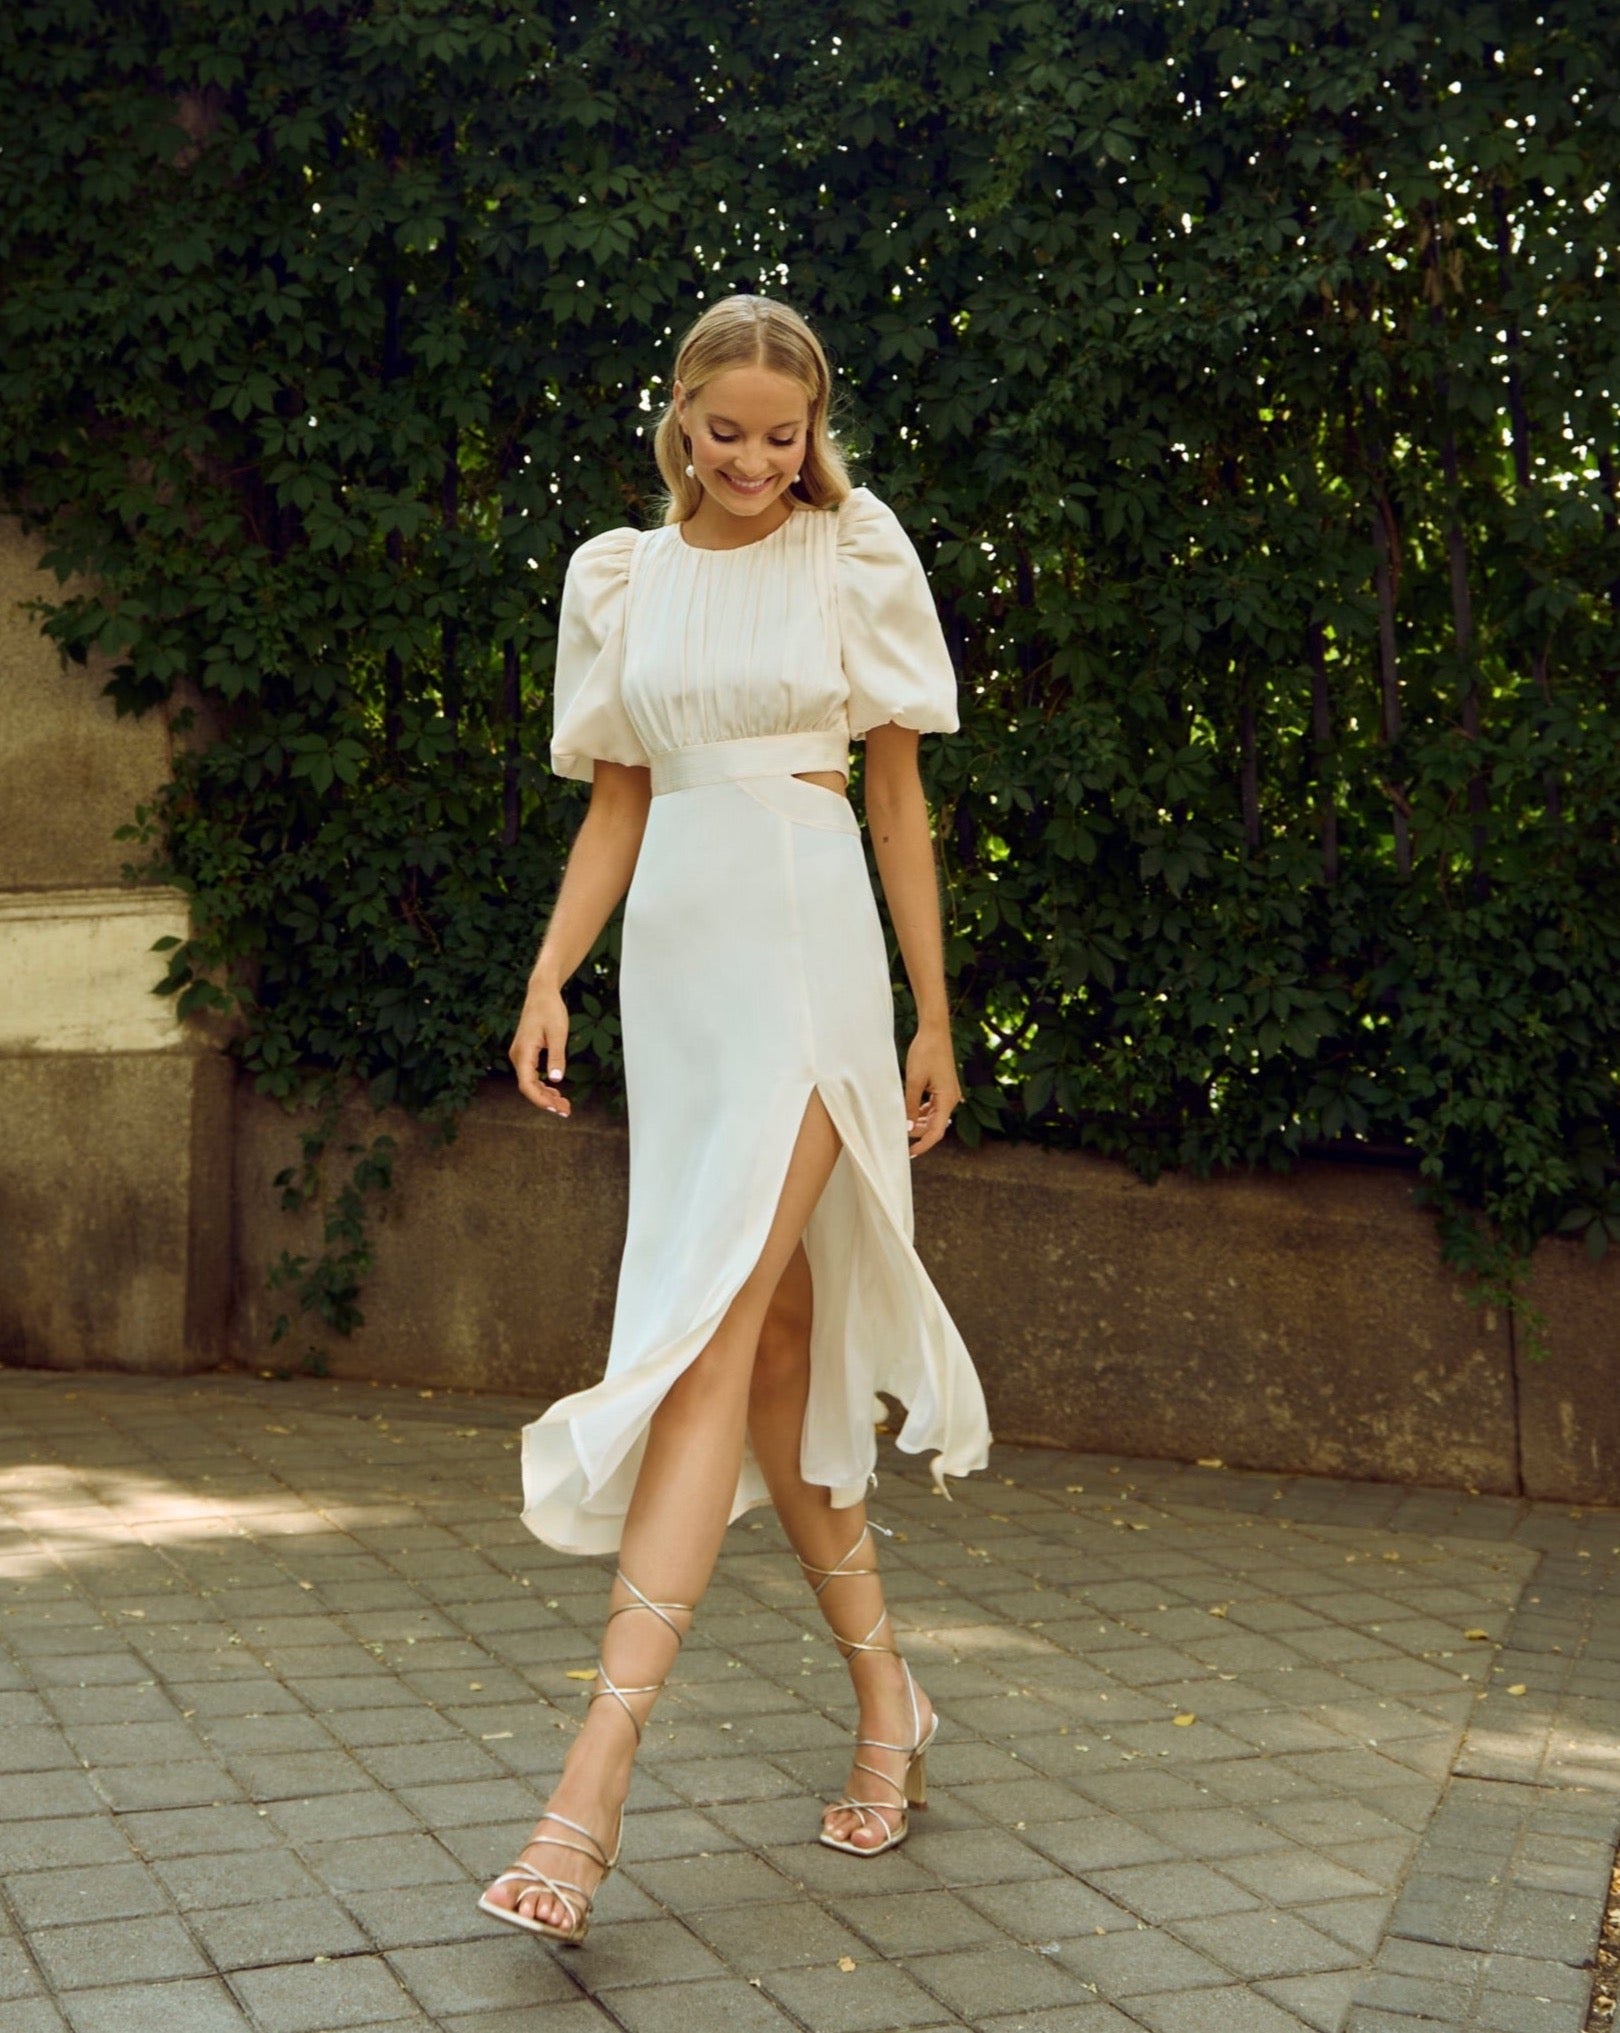 Angelique White Dress